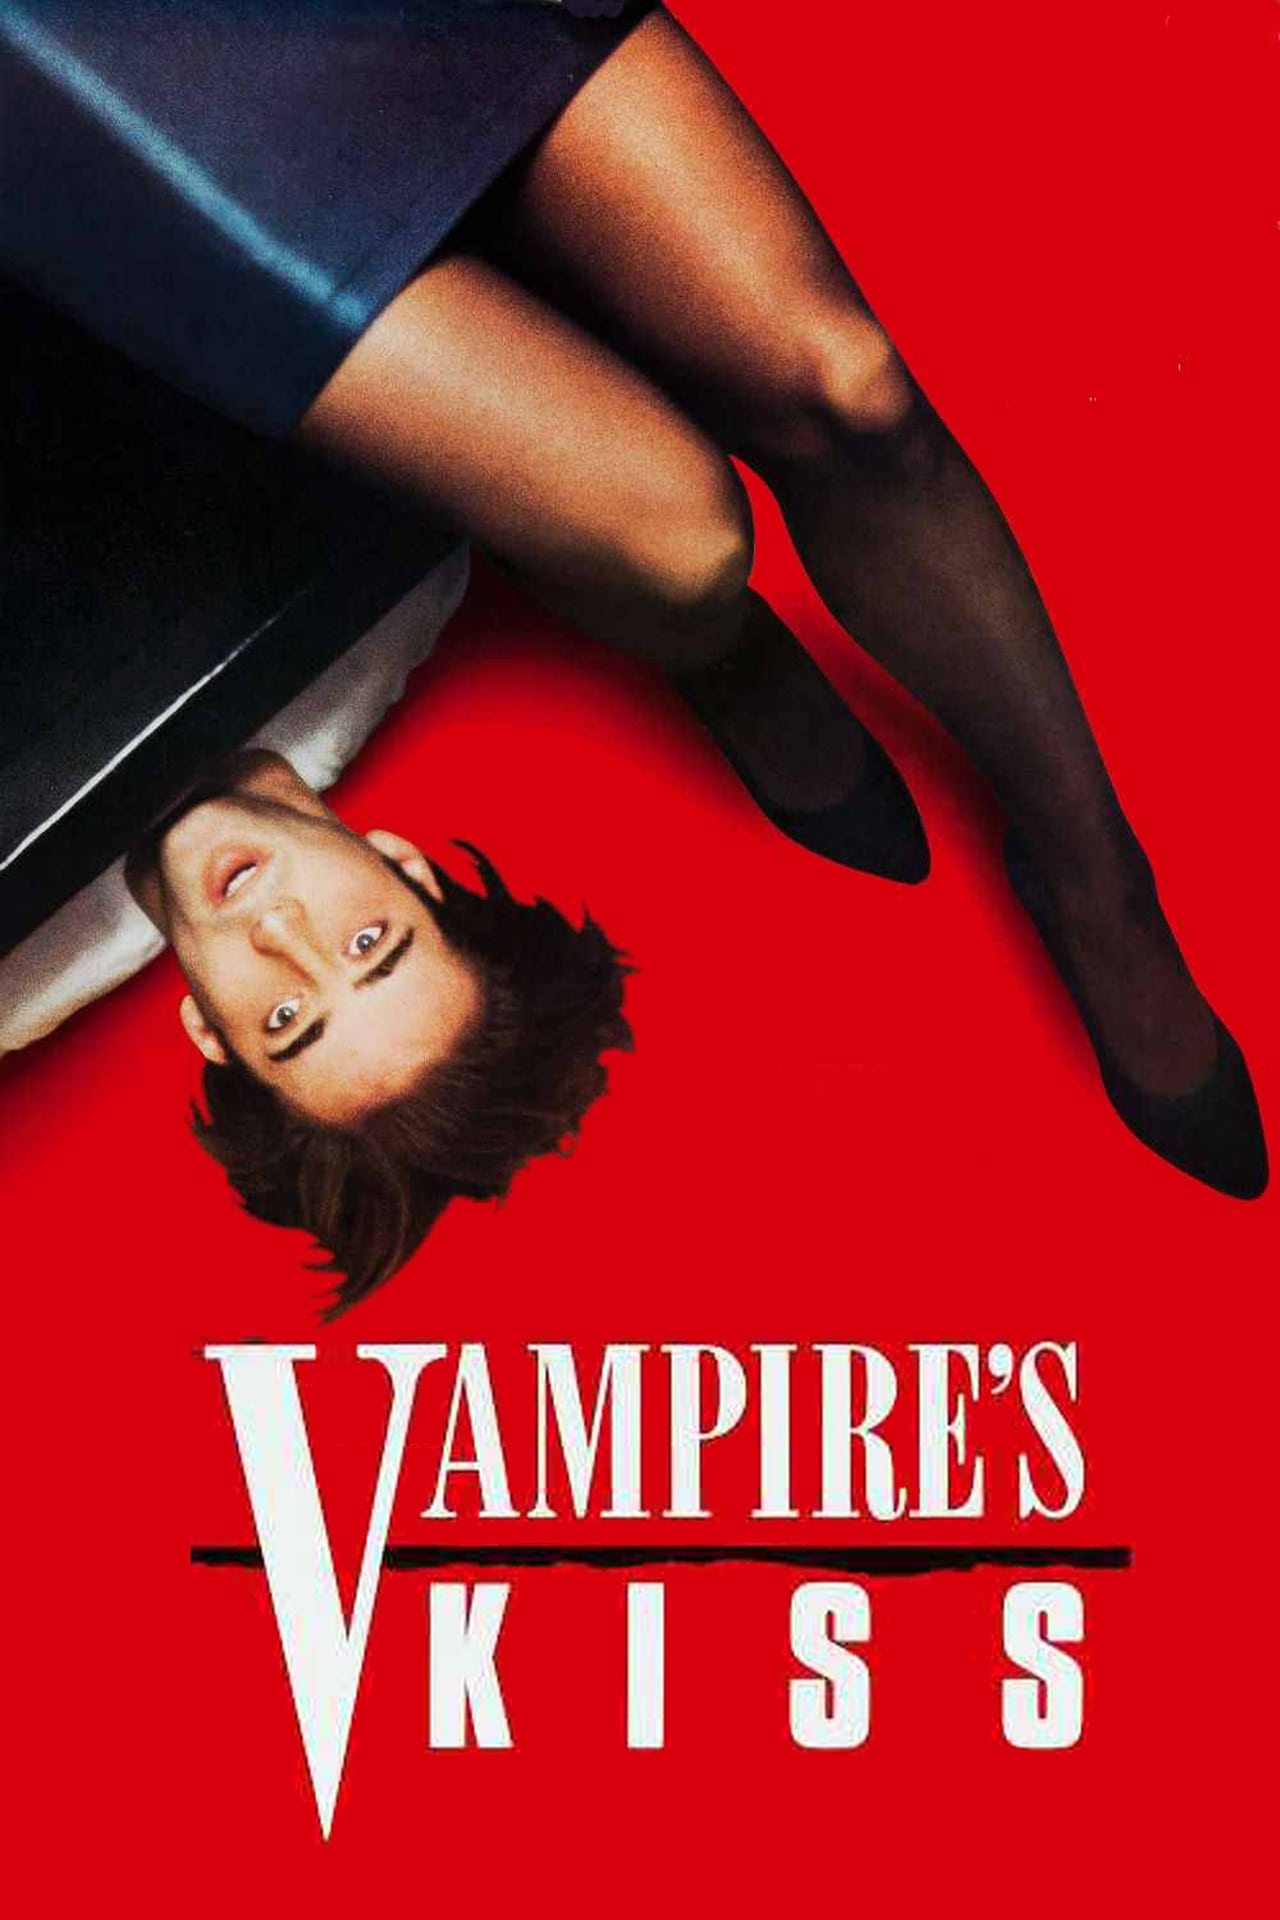 Vampire's Kiss poster